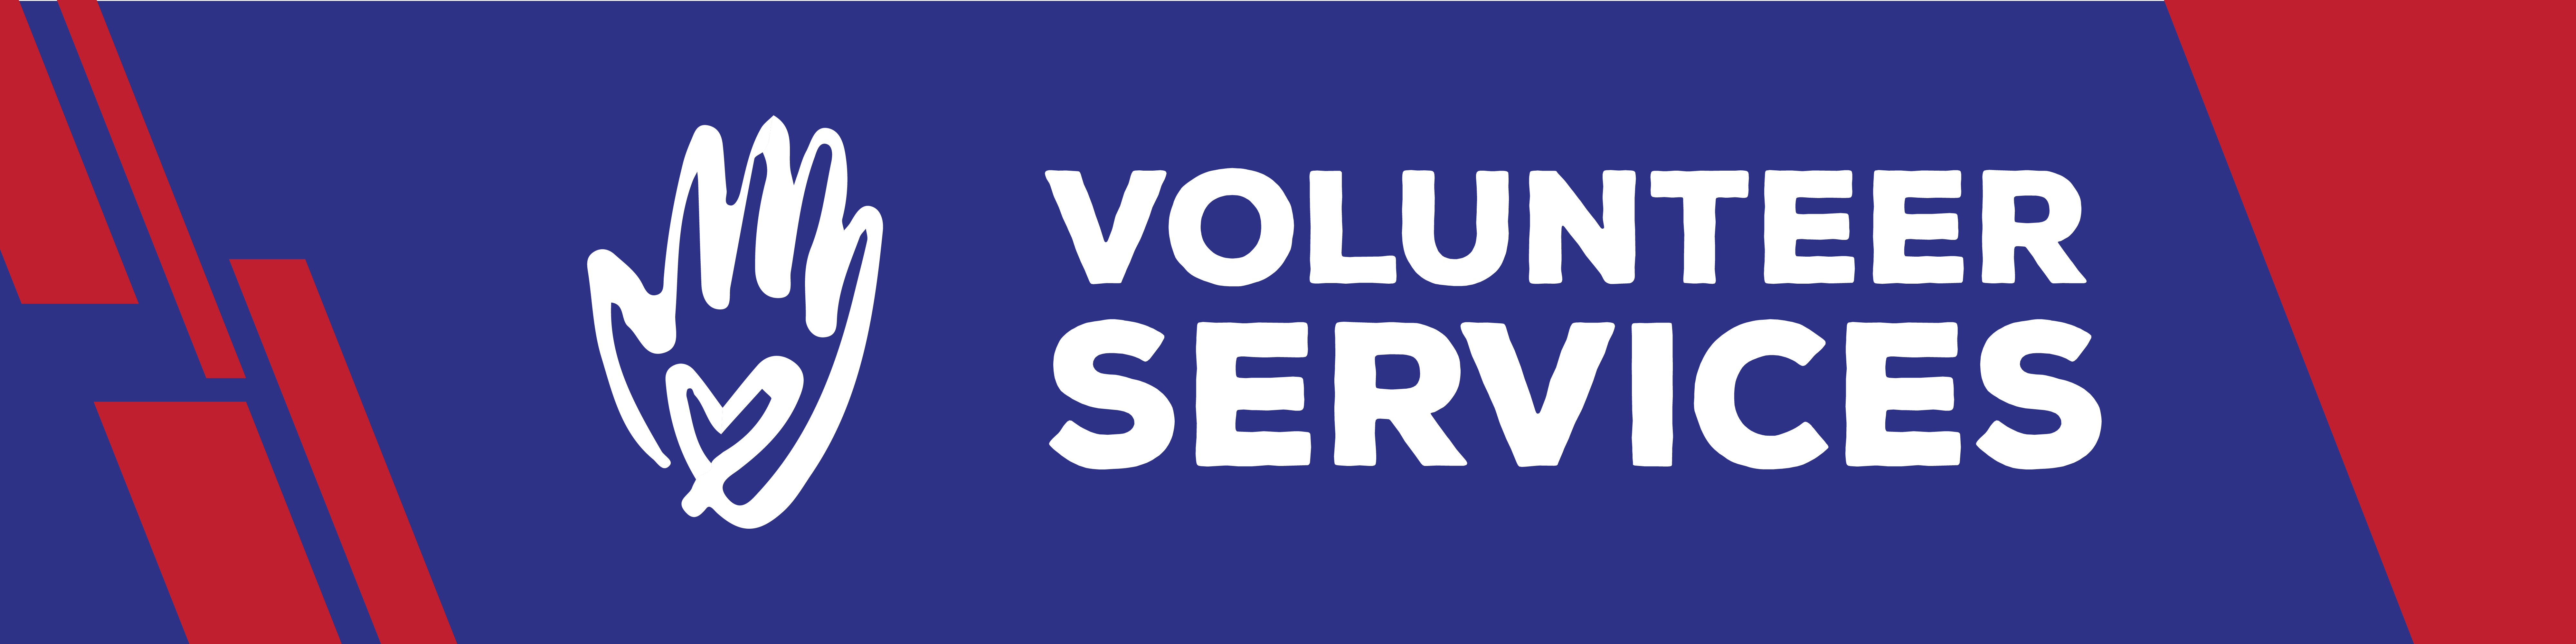 volunteer services